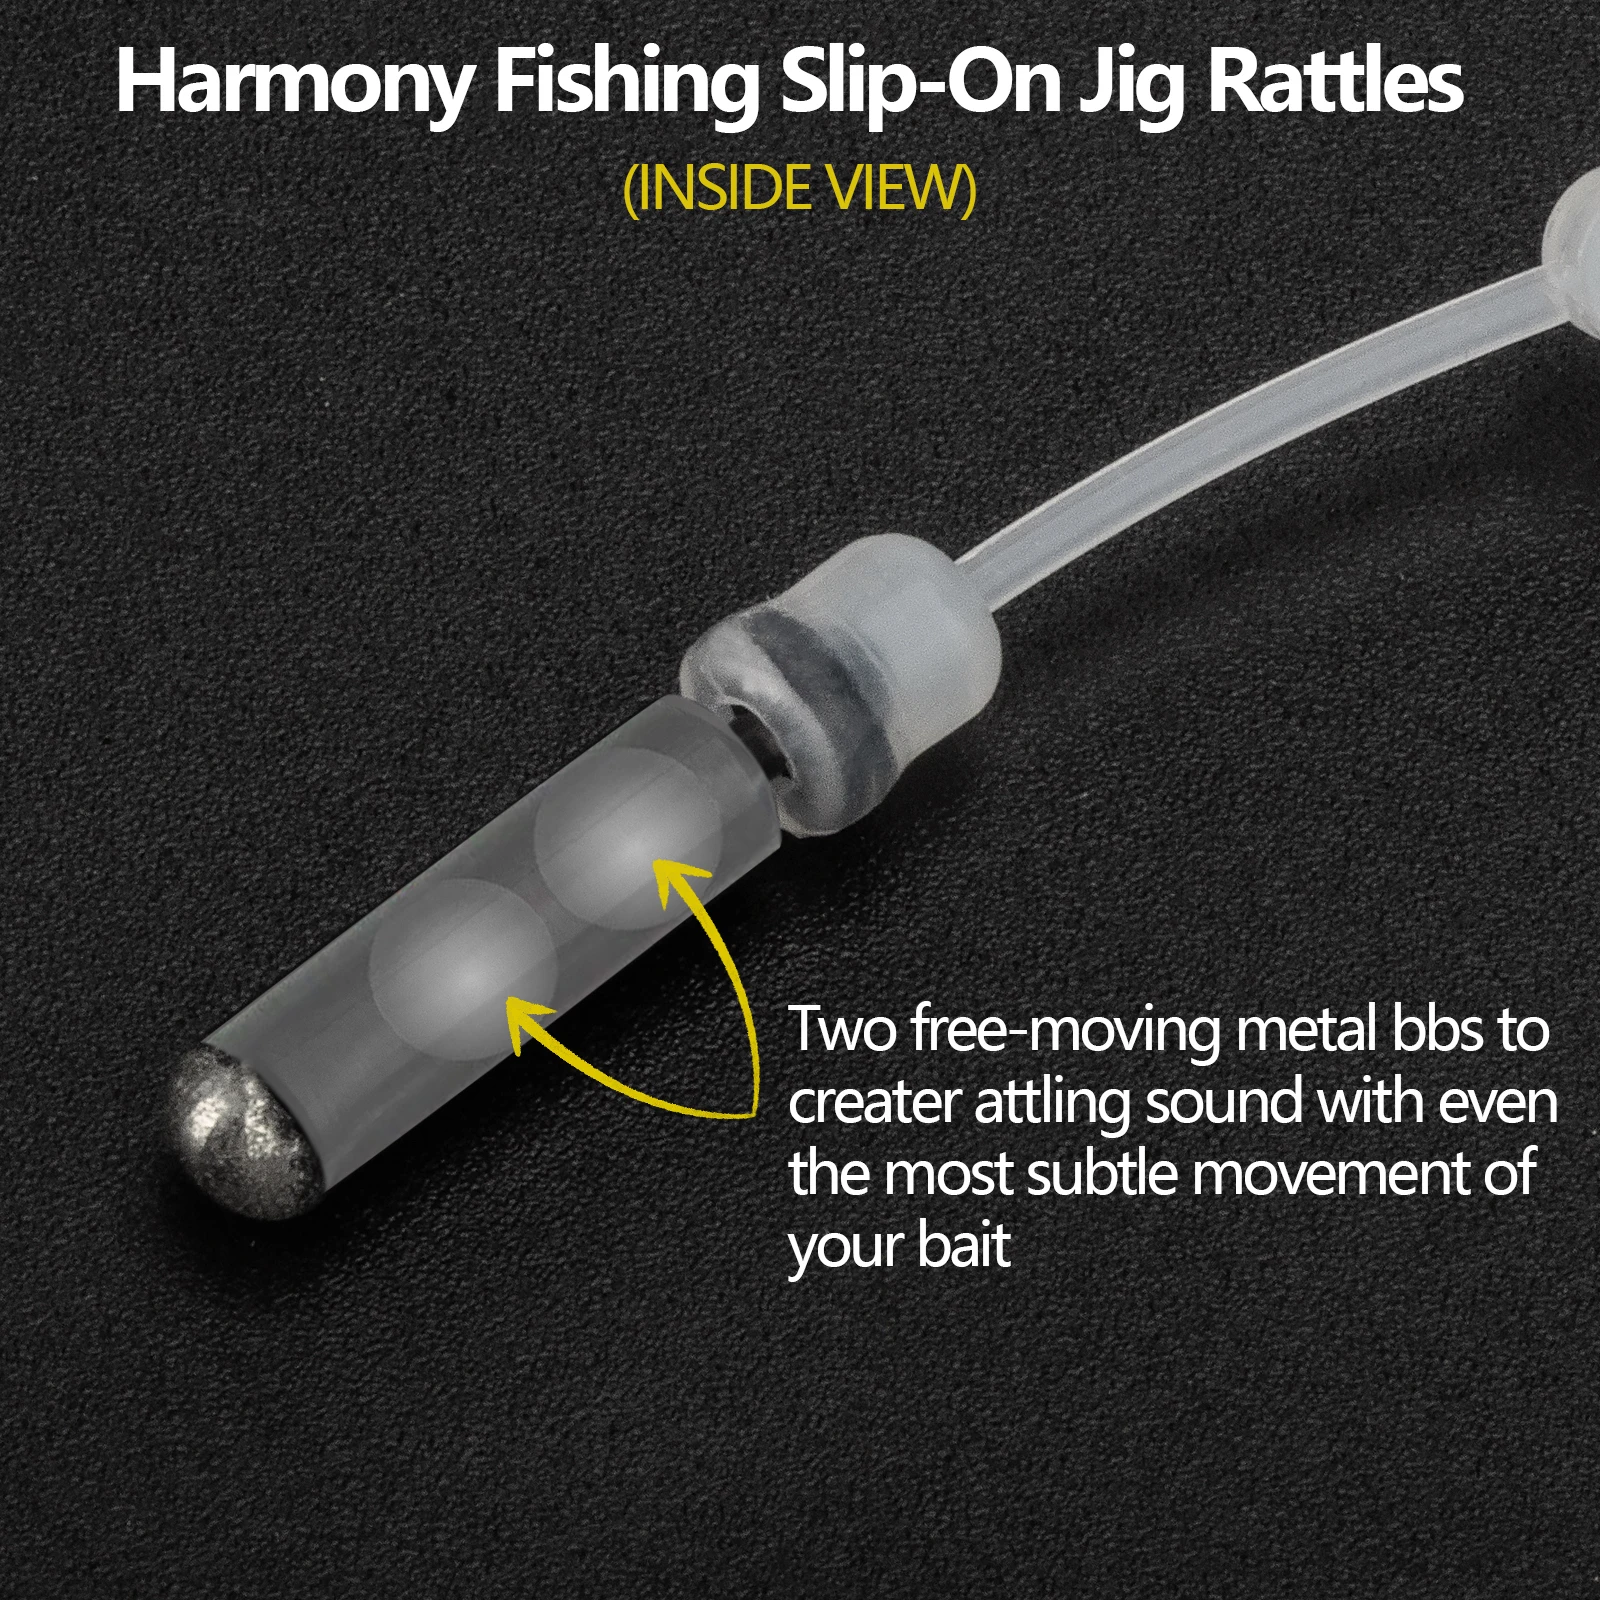 Harmony Fishing - Slip-On Low Profile Jig Rattles (10 Pack)